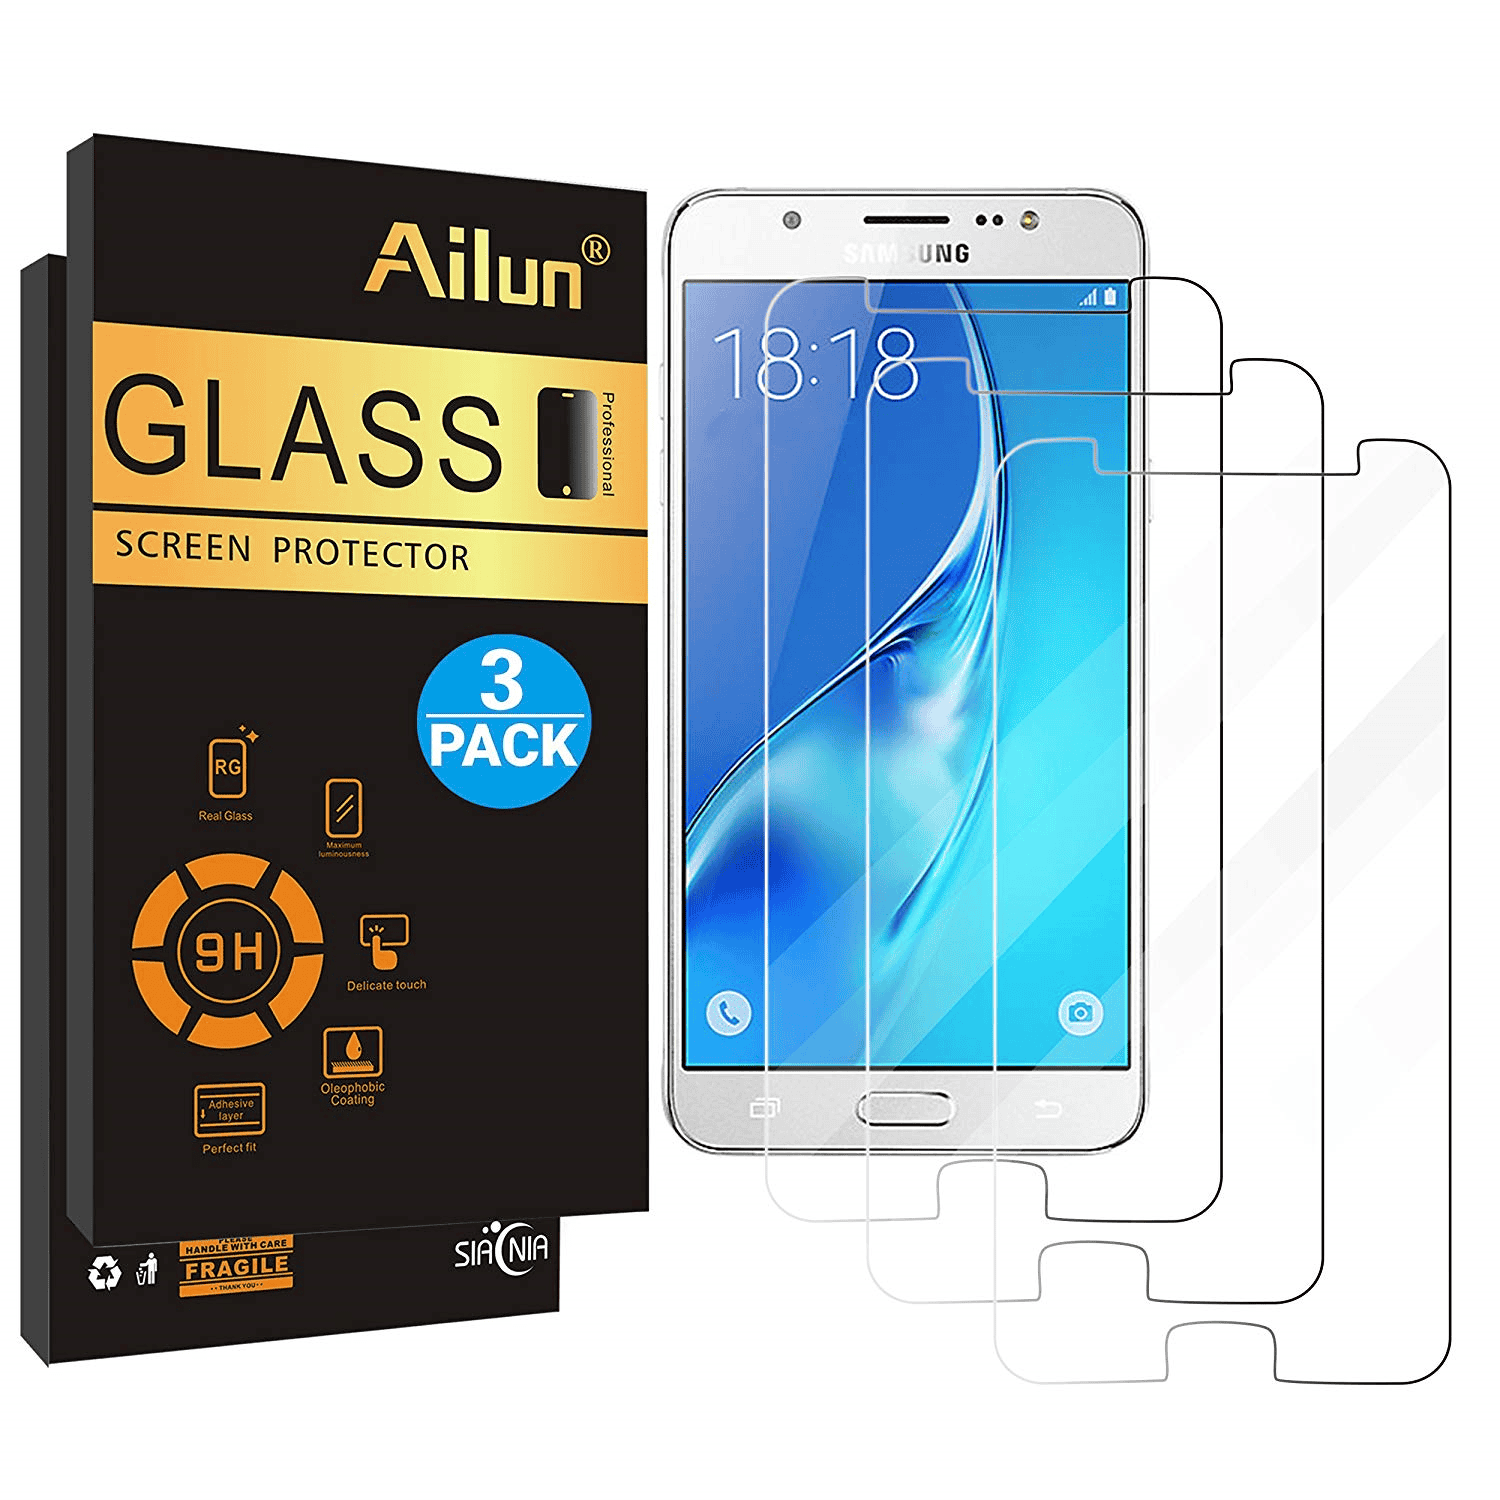 9H Hardness Anti Fingerprint Tempered Glass Screen Protector Film for Samsung Galaxy J7 2018 CUSKING Screen Protector for Galaxy J7 2018 3 Pack Bubble Free 